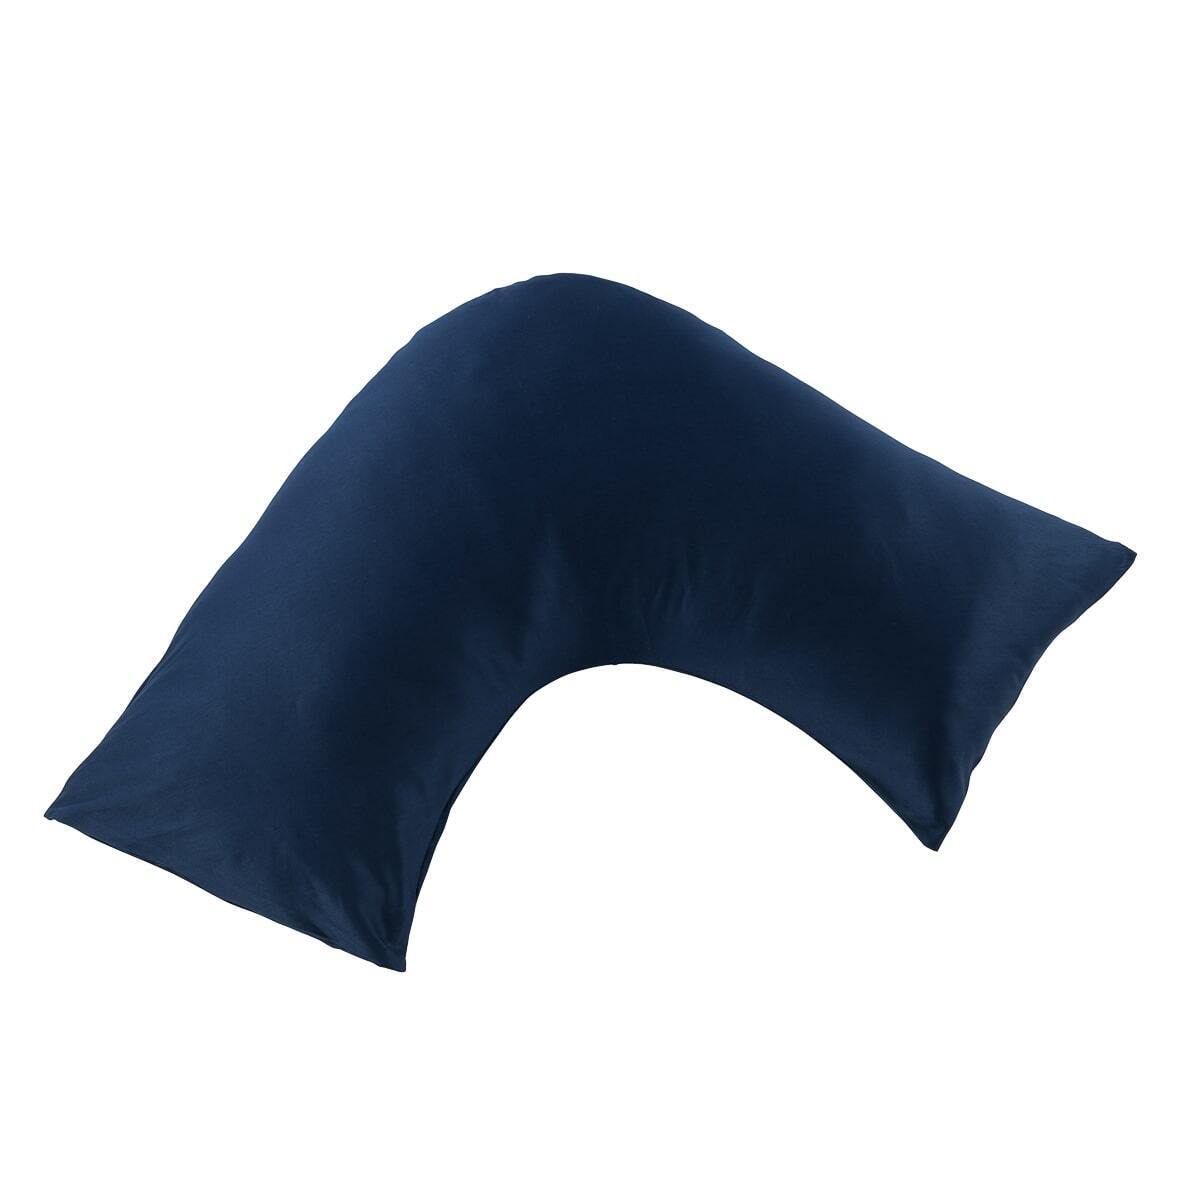 400 Thread Count Navy U-shaped Pillowcase